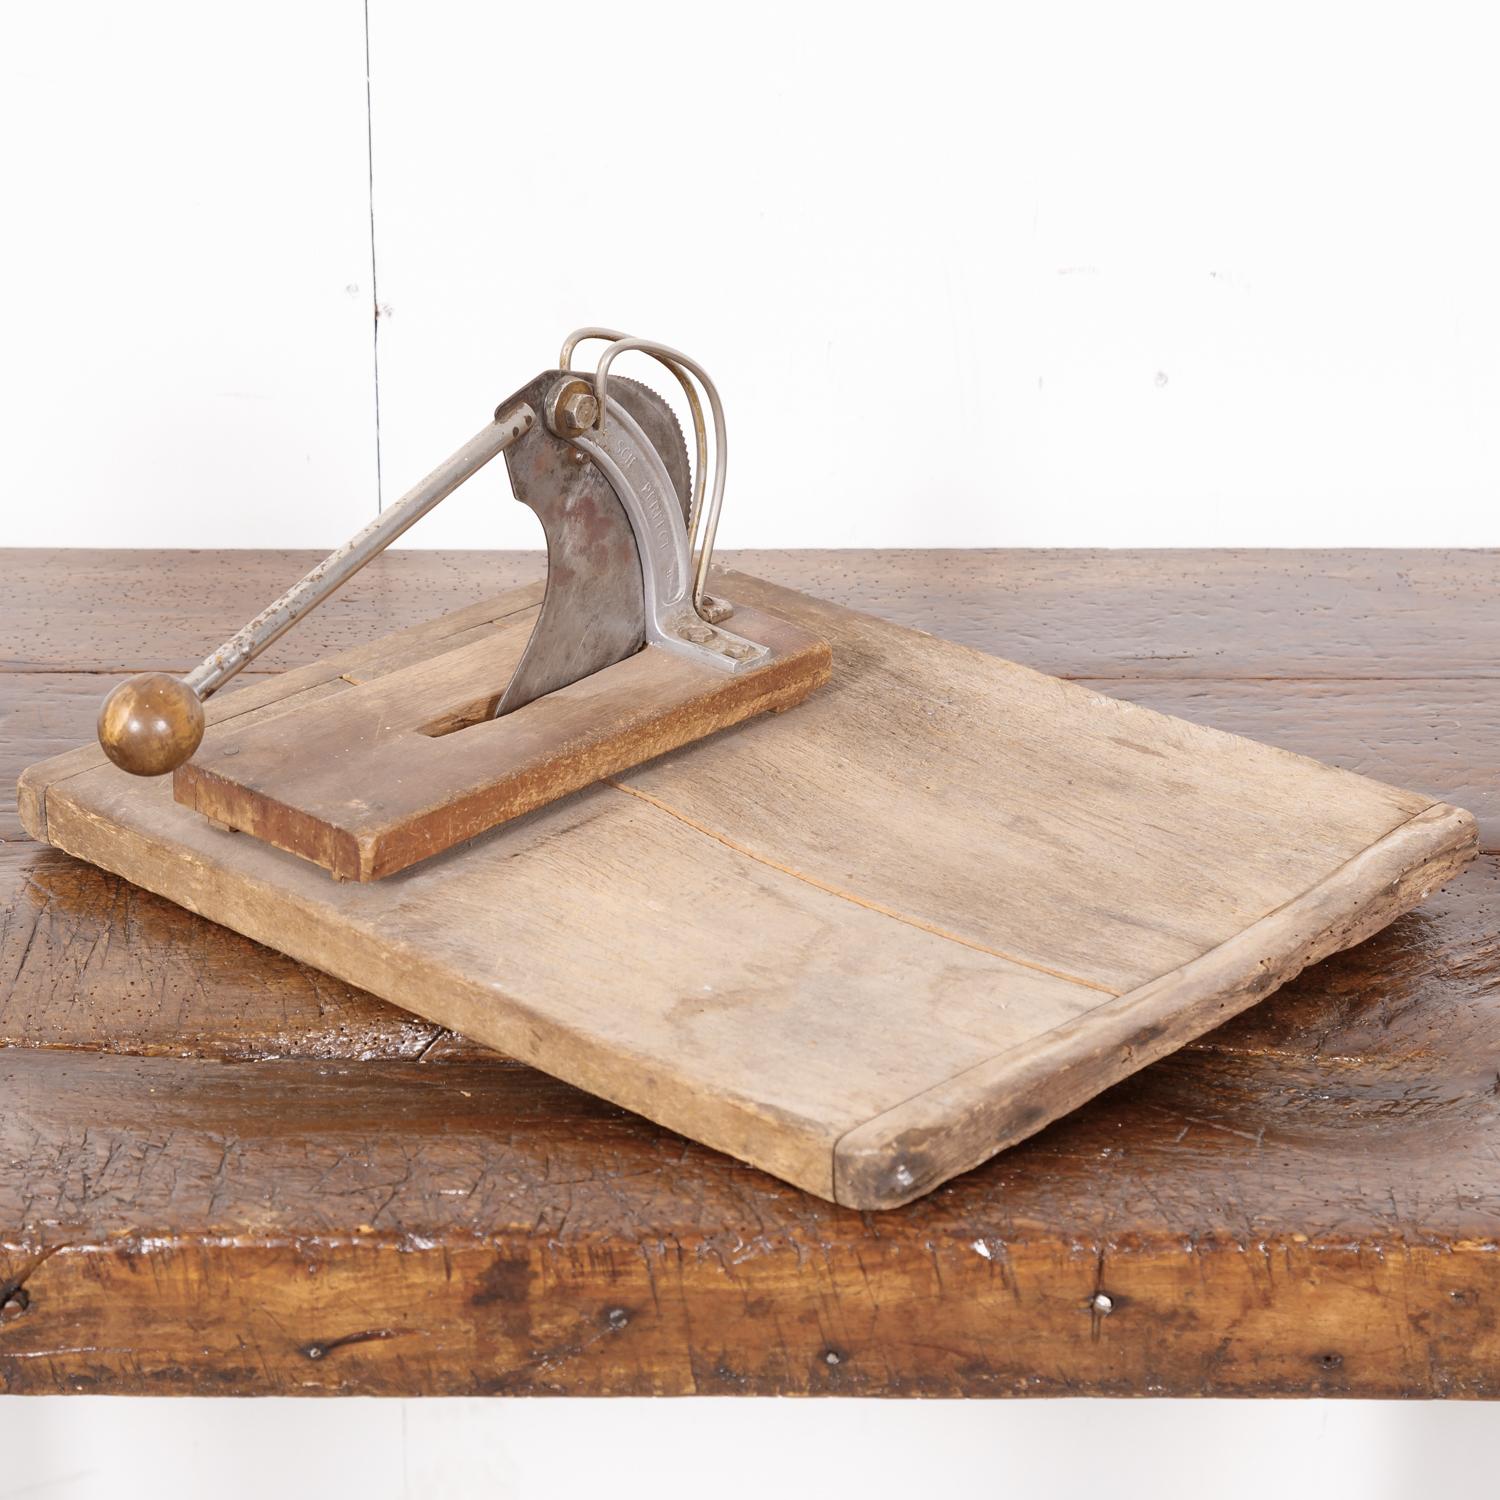 guillotine bread cutter